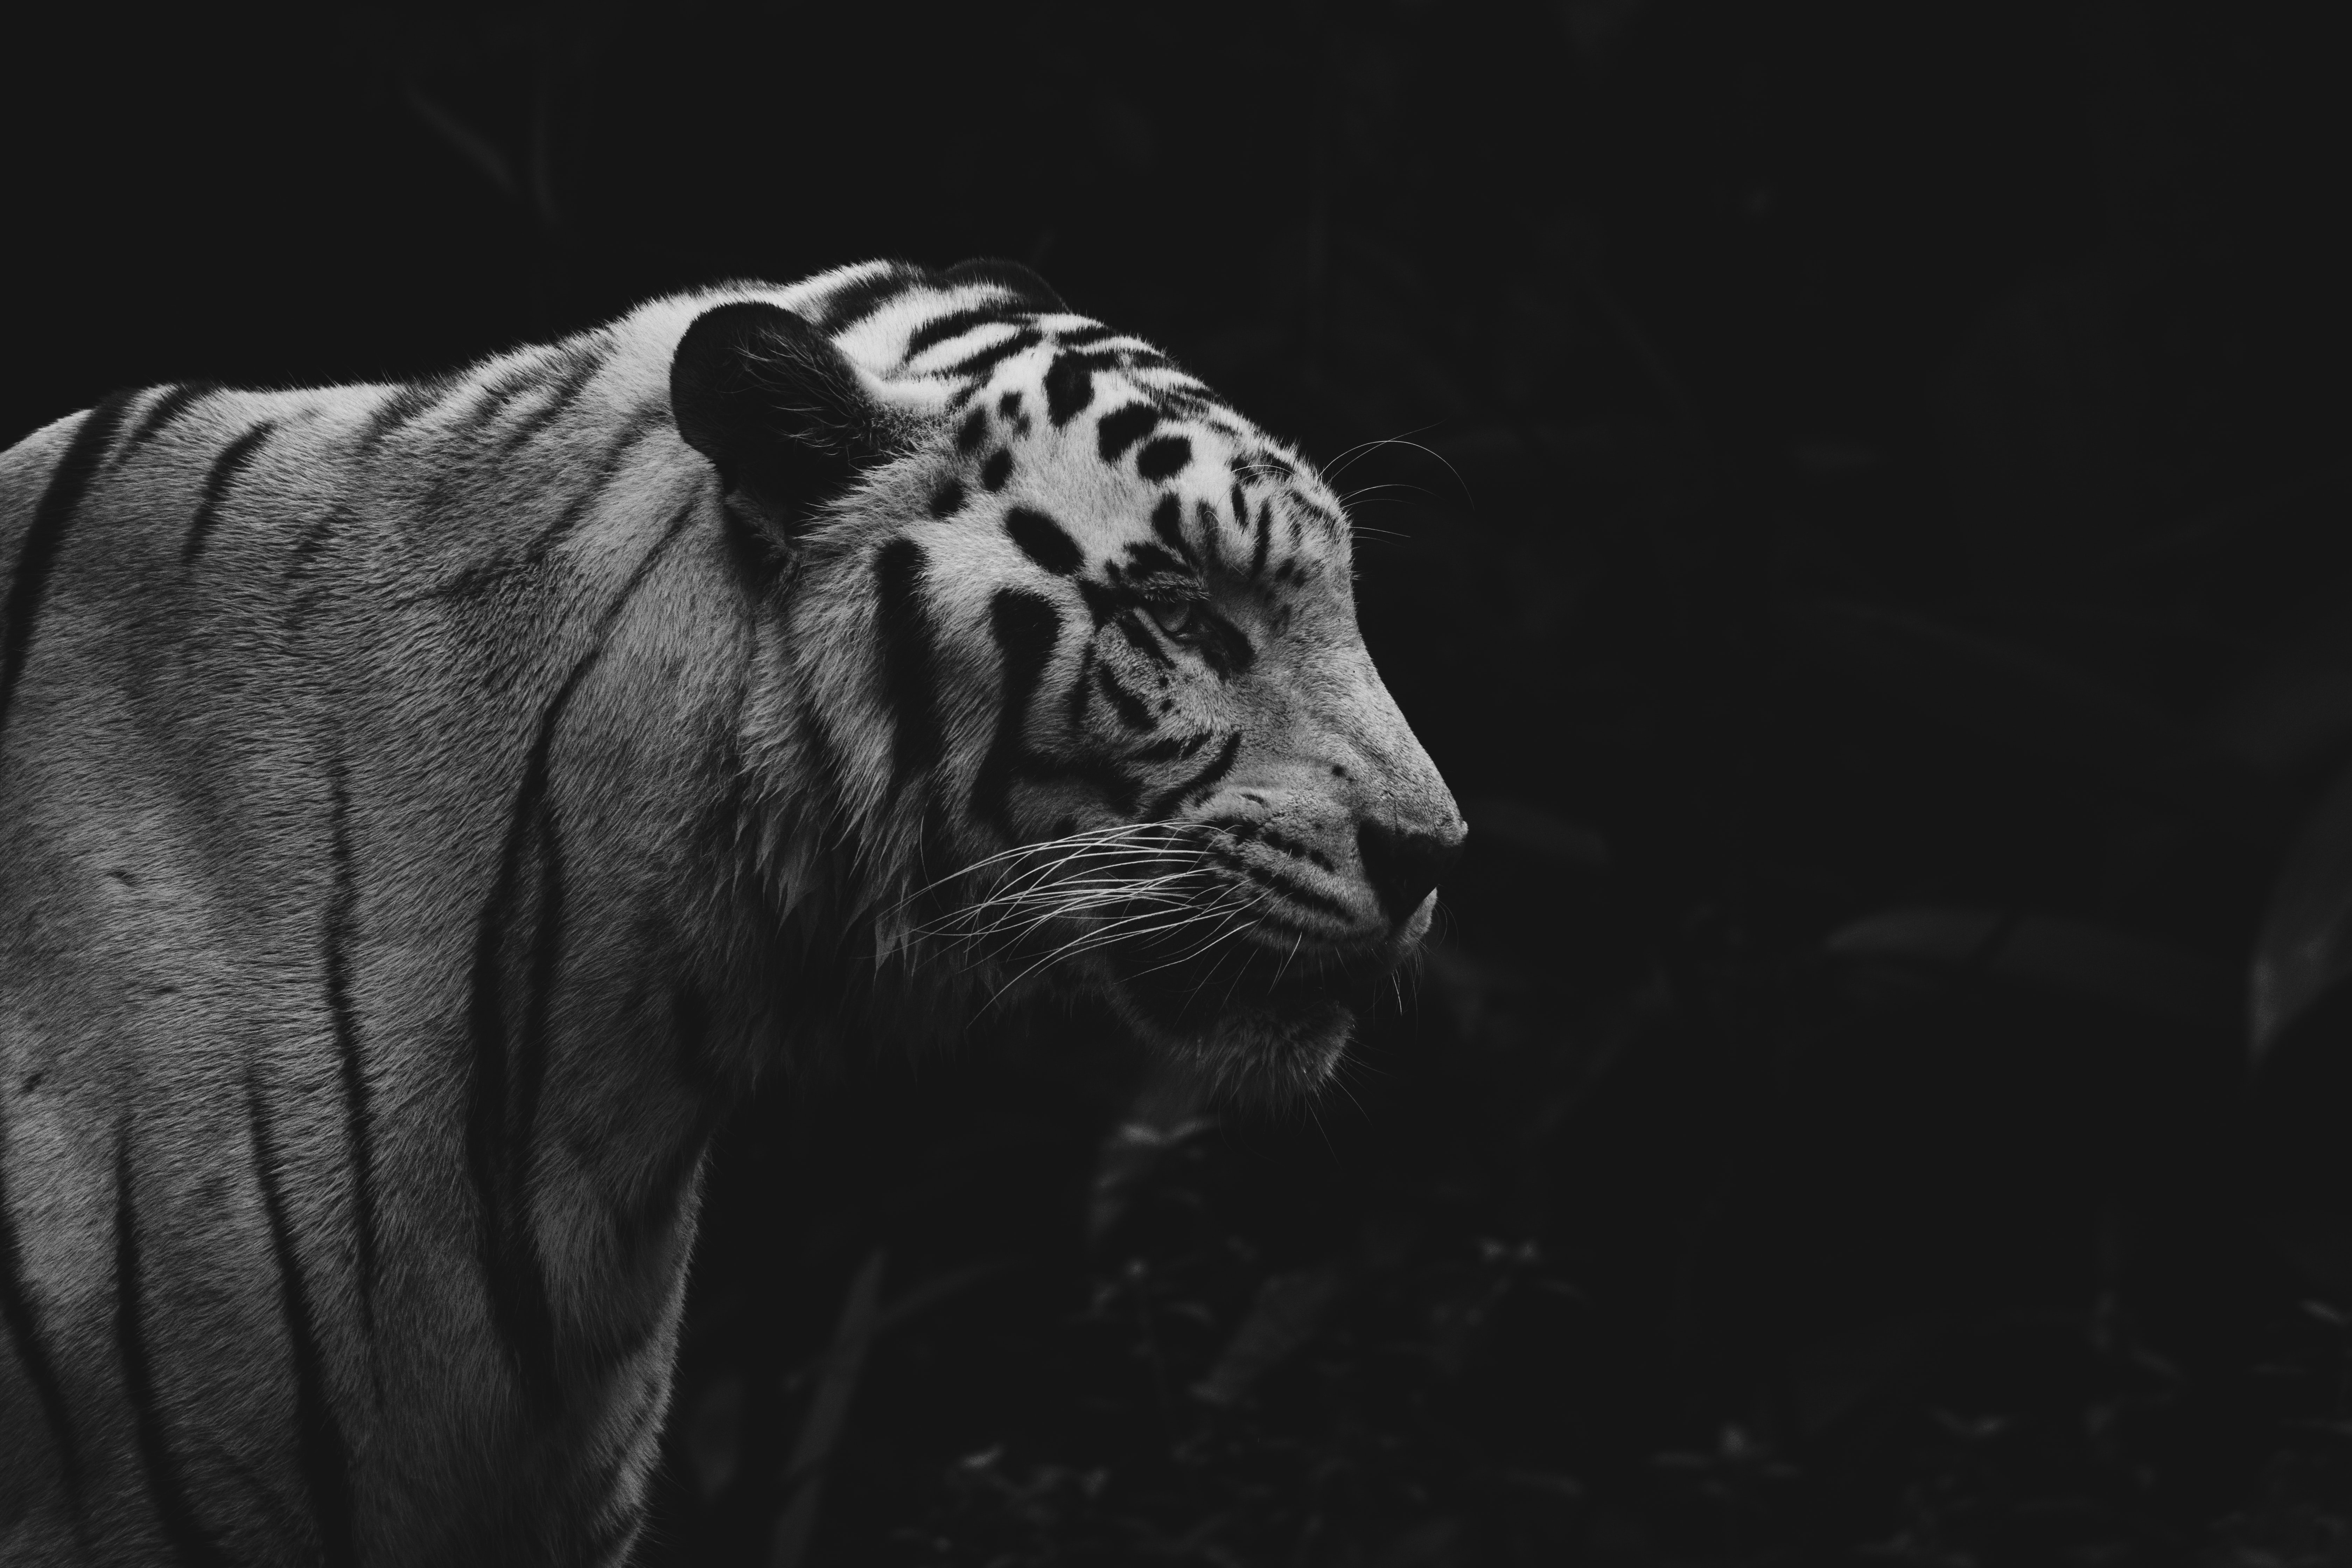 146005 descargar imagen tigre, animales, depredador, fauna silvestre, vida silvestre, bw, chb, animal: fondos de pantalla y protectores de pantalla gratis